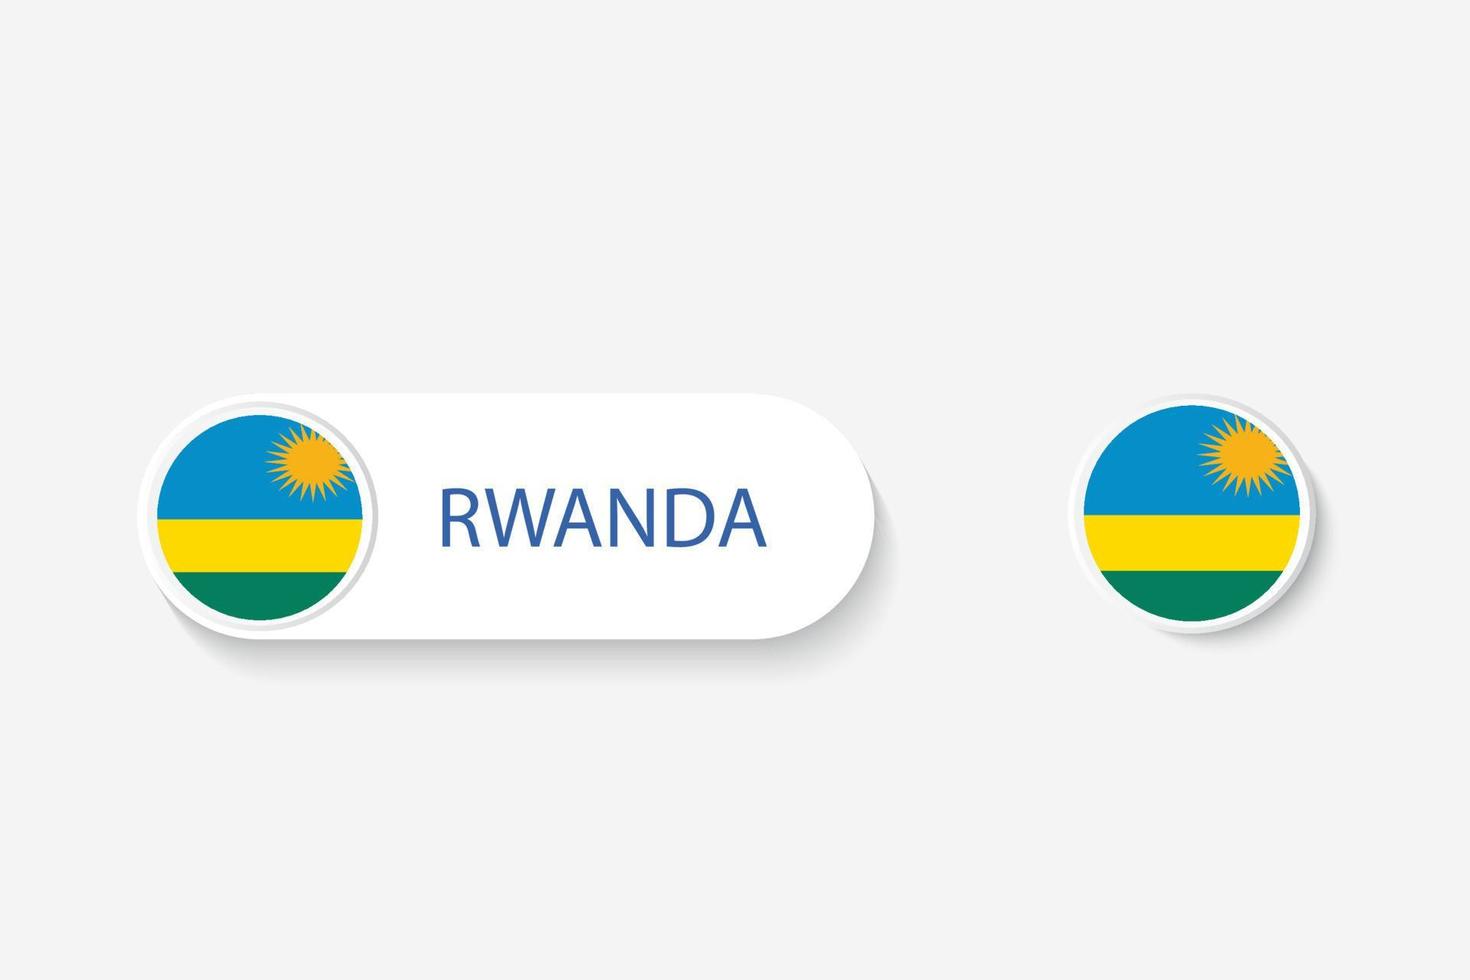 Rwanda button flag in illustration of oval shaped with word of Rwanda. And button flag Rwanda. vector